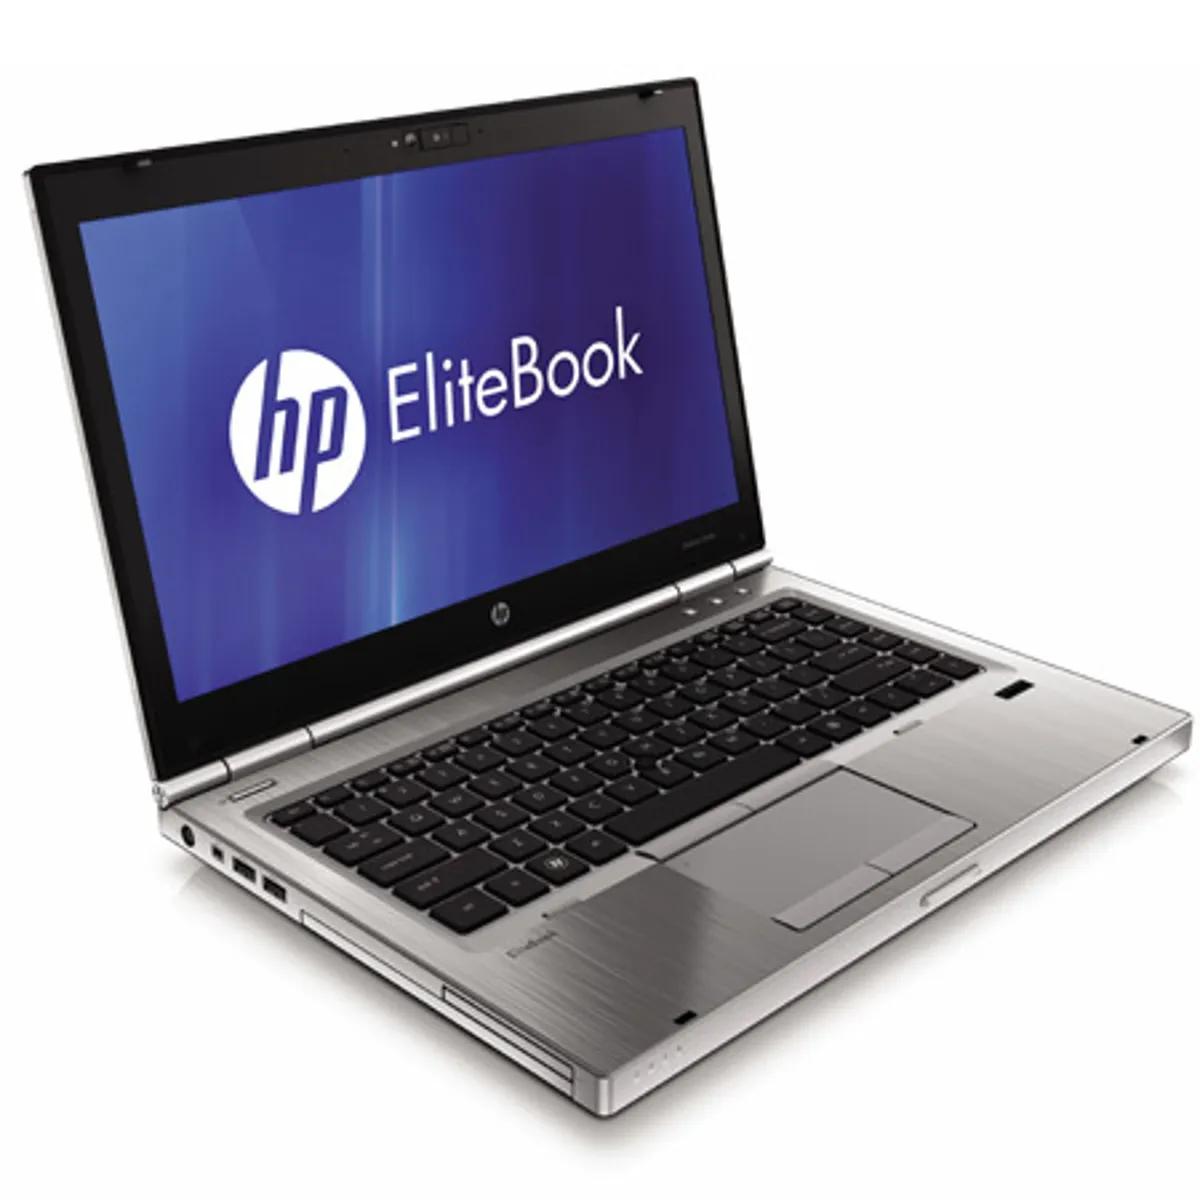 hewlett packard elitebook 8460p specs - Is HP EliteBook 8460p 32 or 64 bit